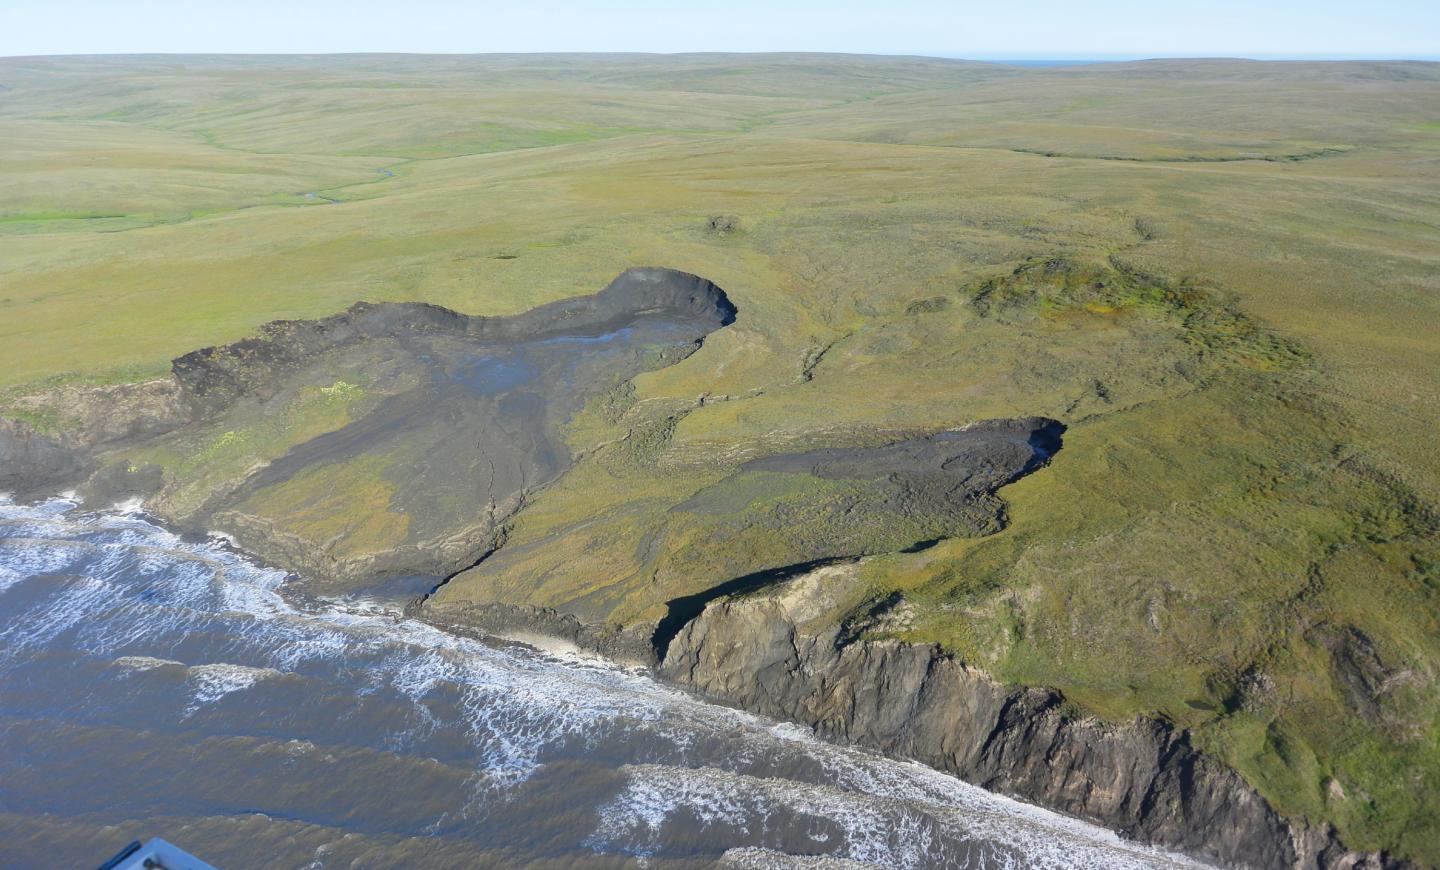 Shoreline Retreat and Erosion along Arctic Coasts